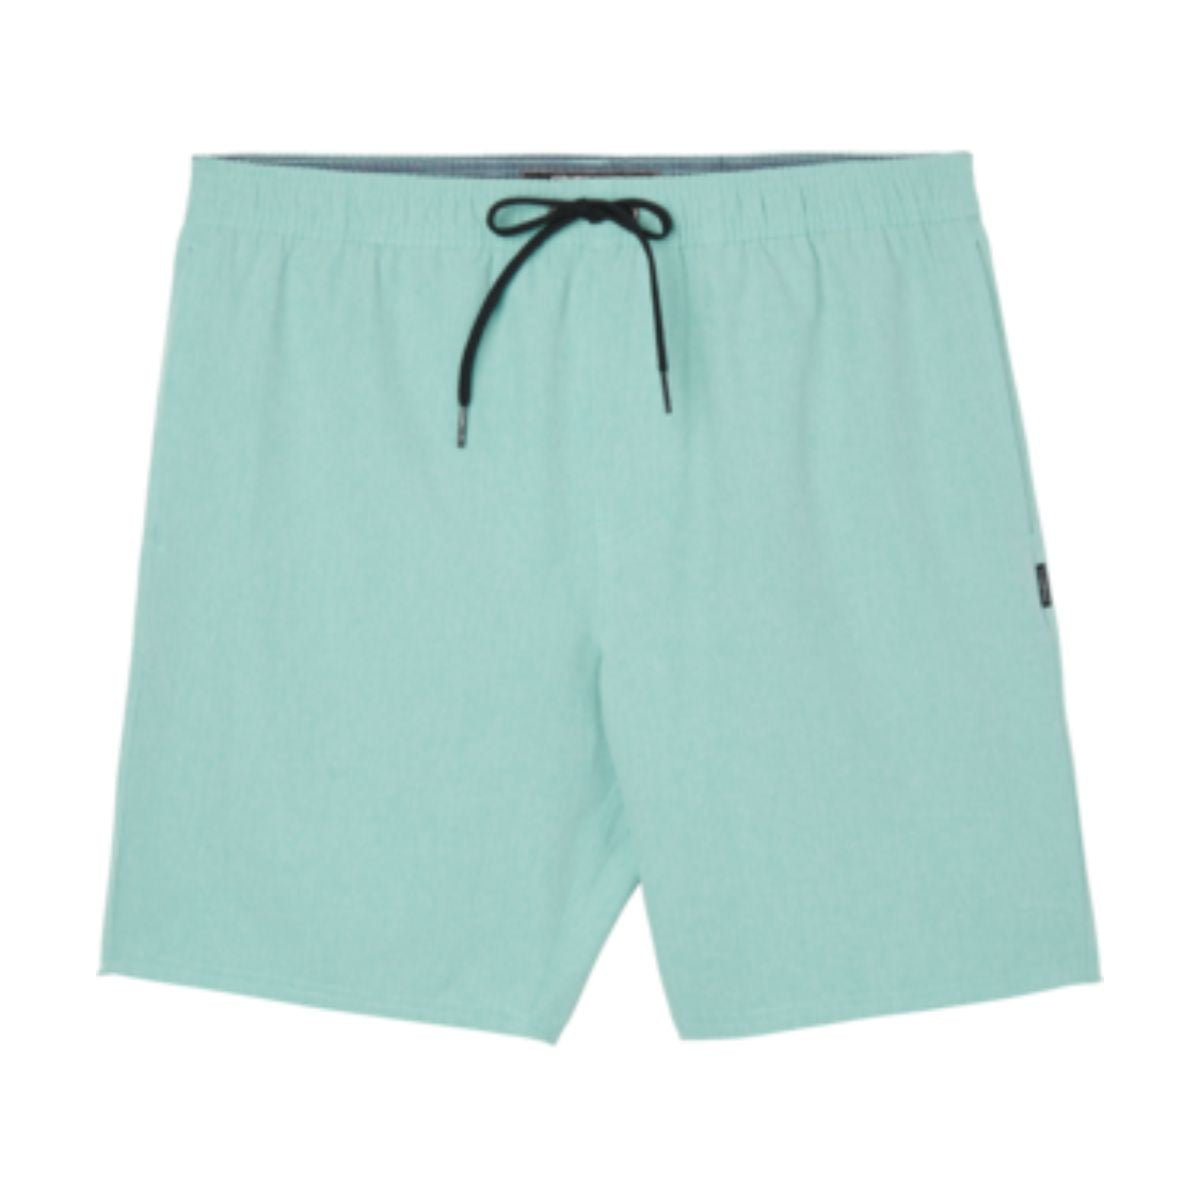 O'Neill Boys Reserve E-Waist Hybrid Shorts in Aqua Wash - BoardCo